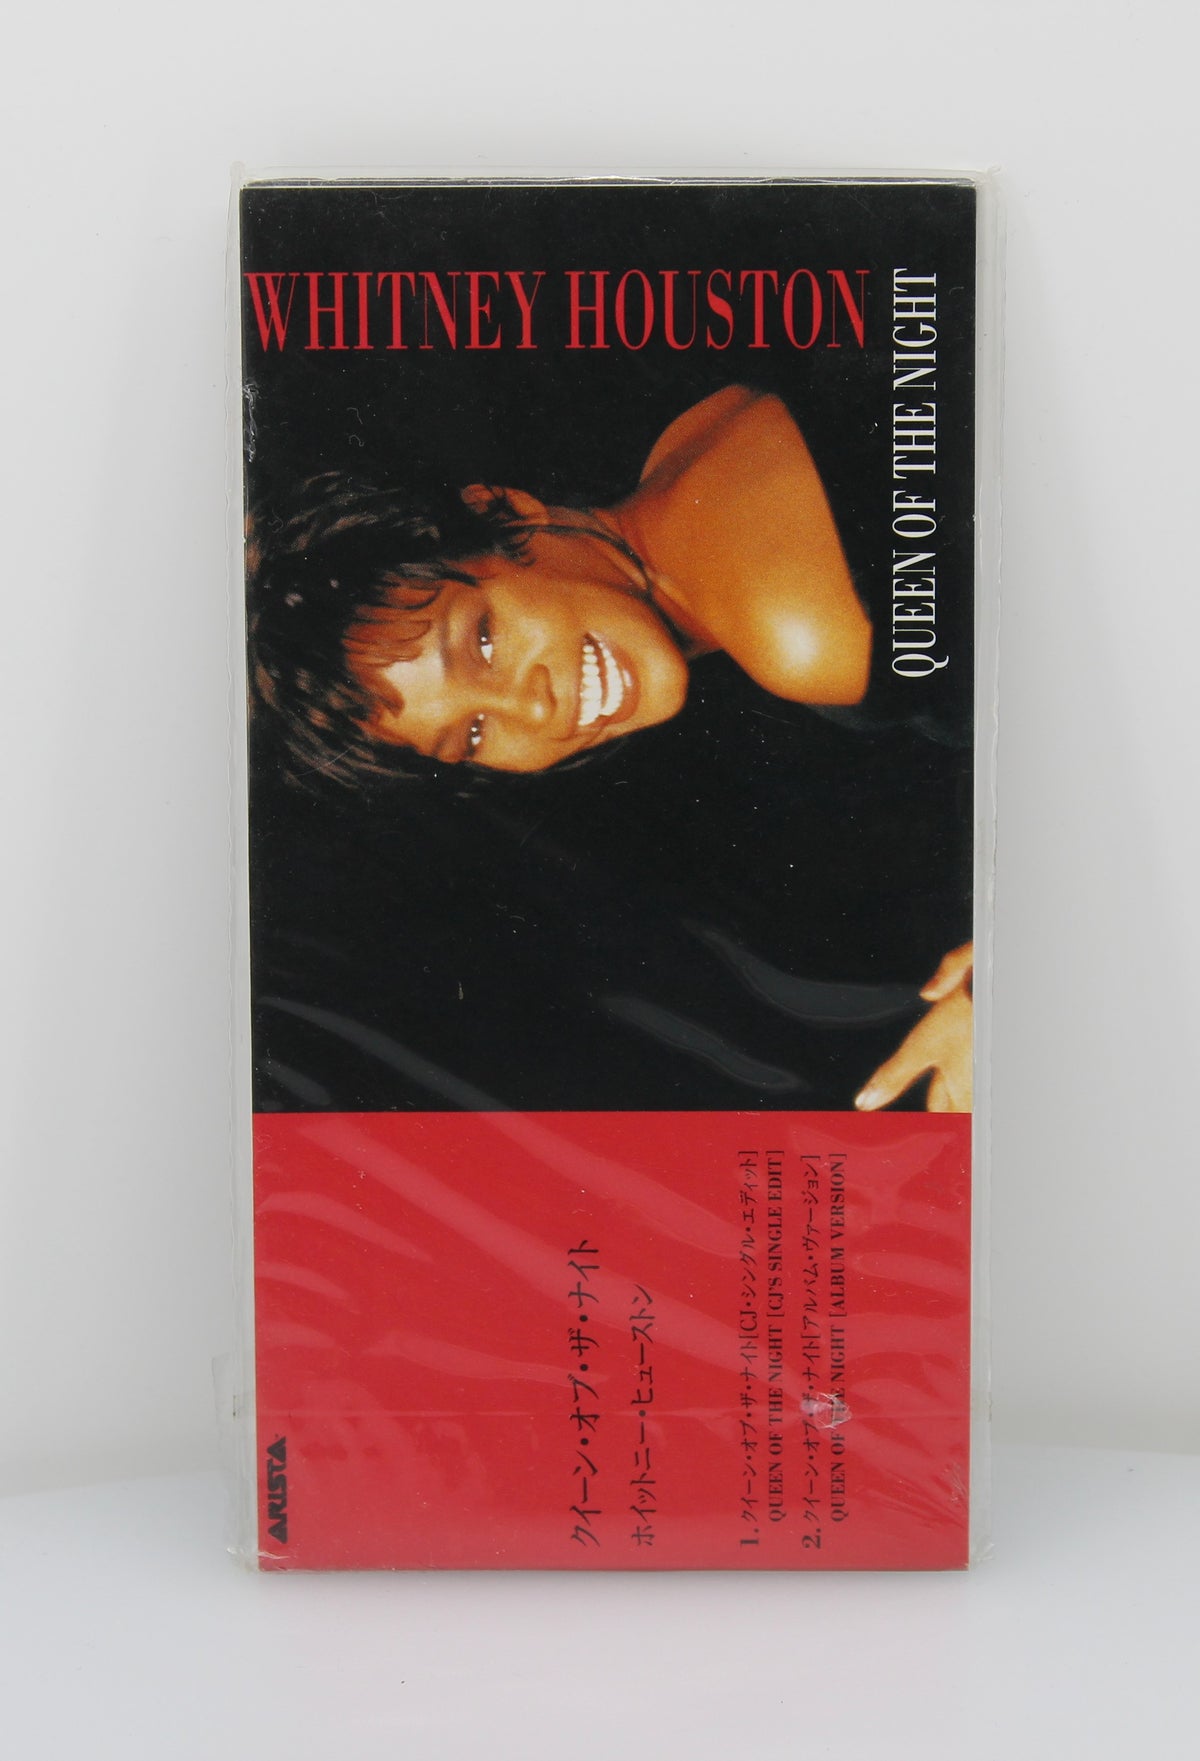 Whitney Houston – Queen Of The Night, CD, Mini, Single, Japan 1993